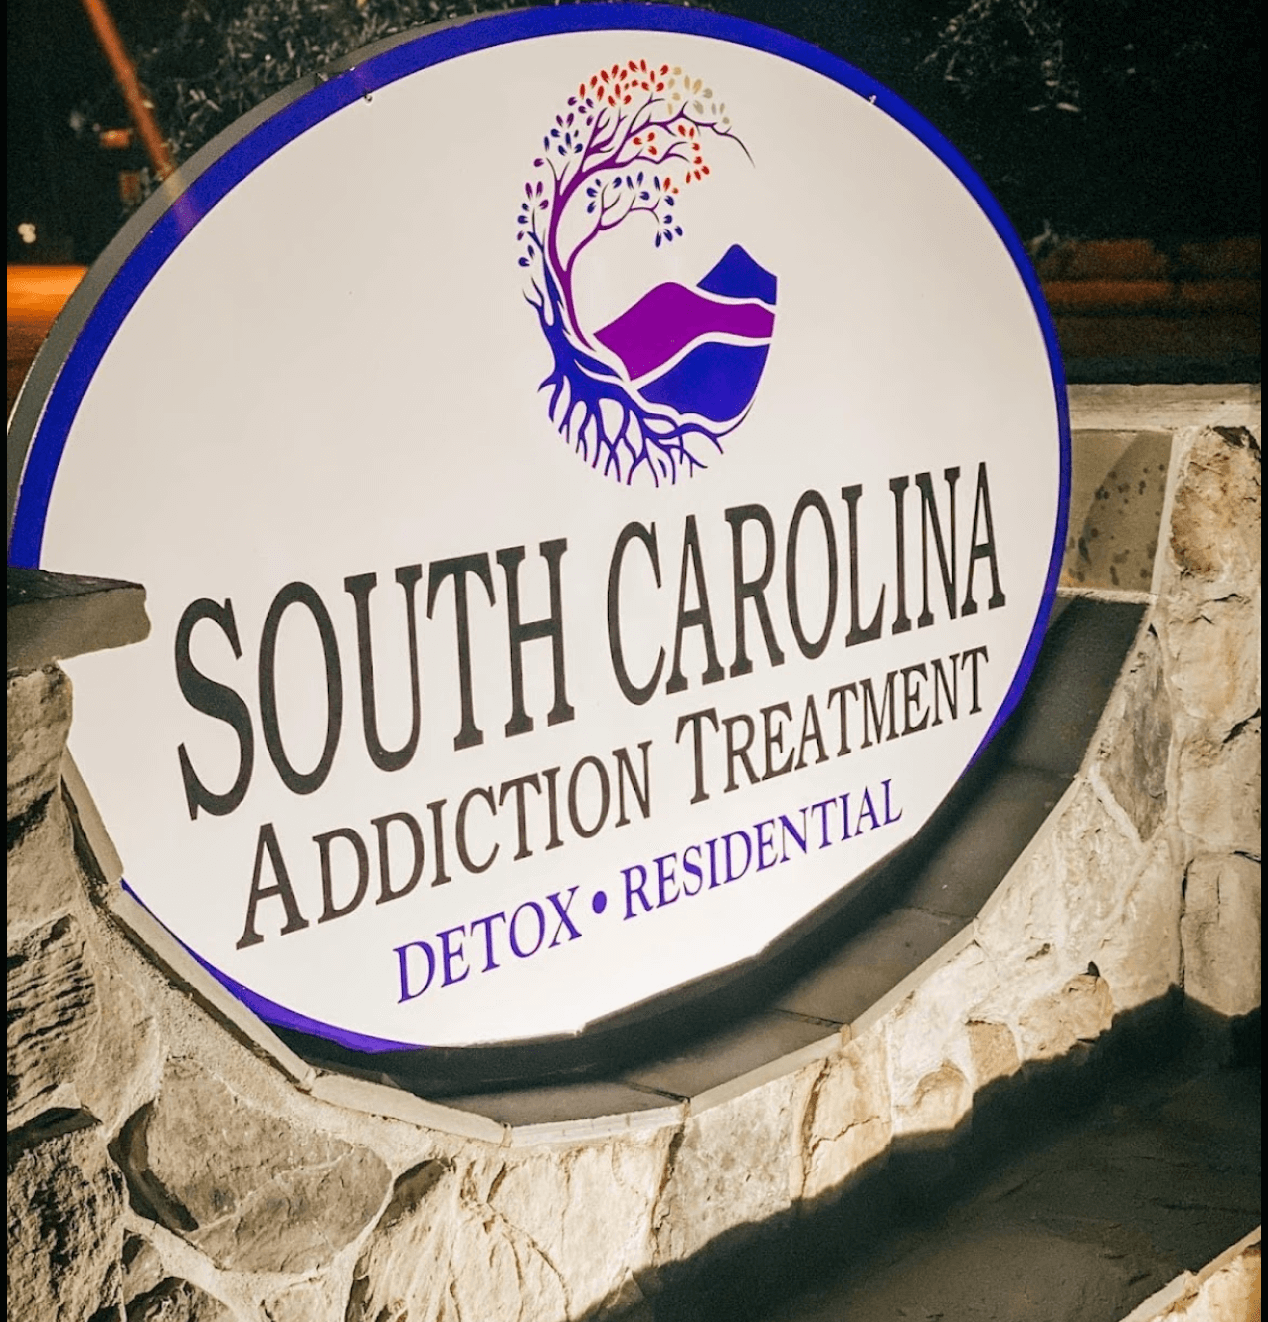 South Carolina Addiction Treatment Detox & Residential